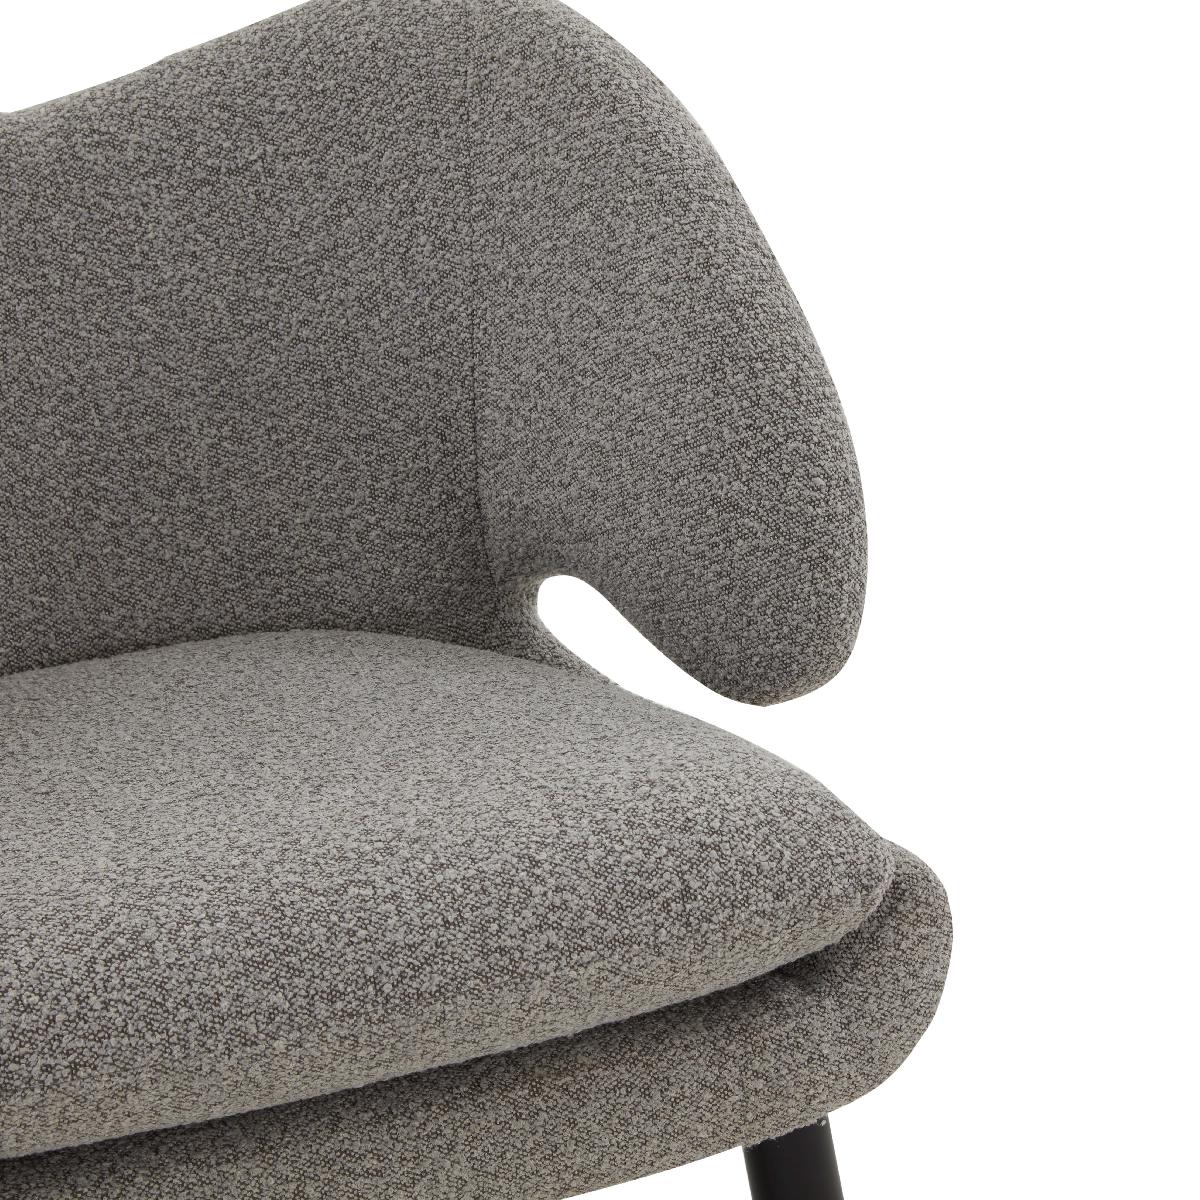 Safavieh Couture Felicia Contemporary Accent Chair - Light Grey / Black